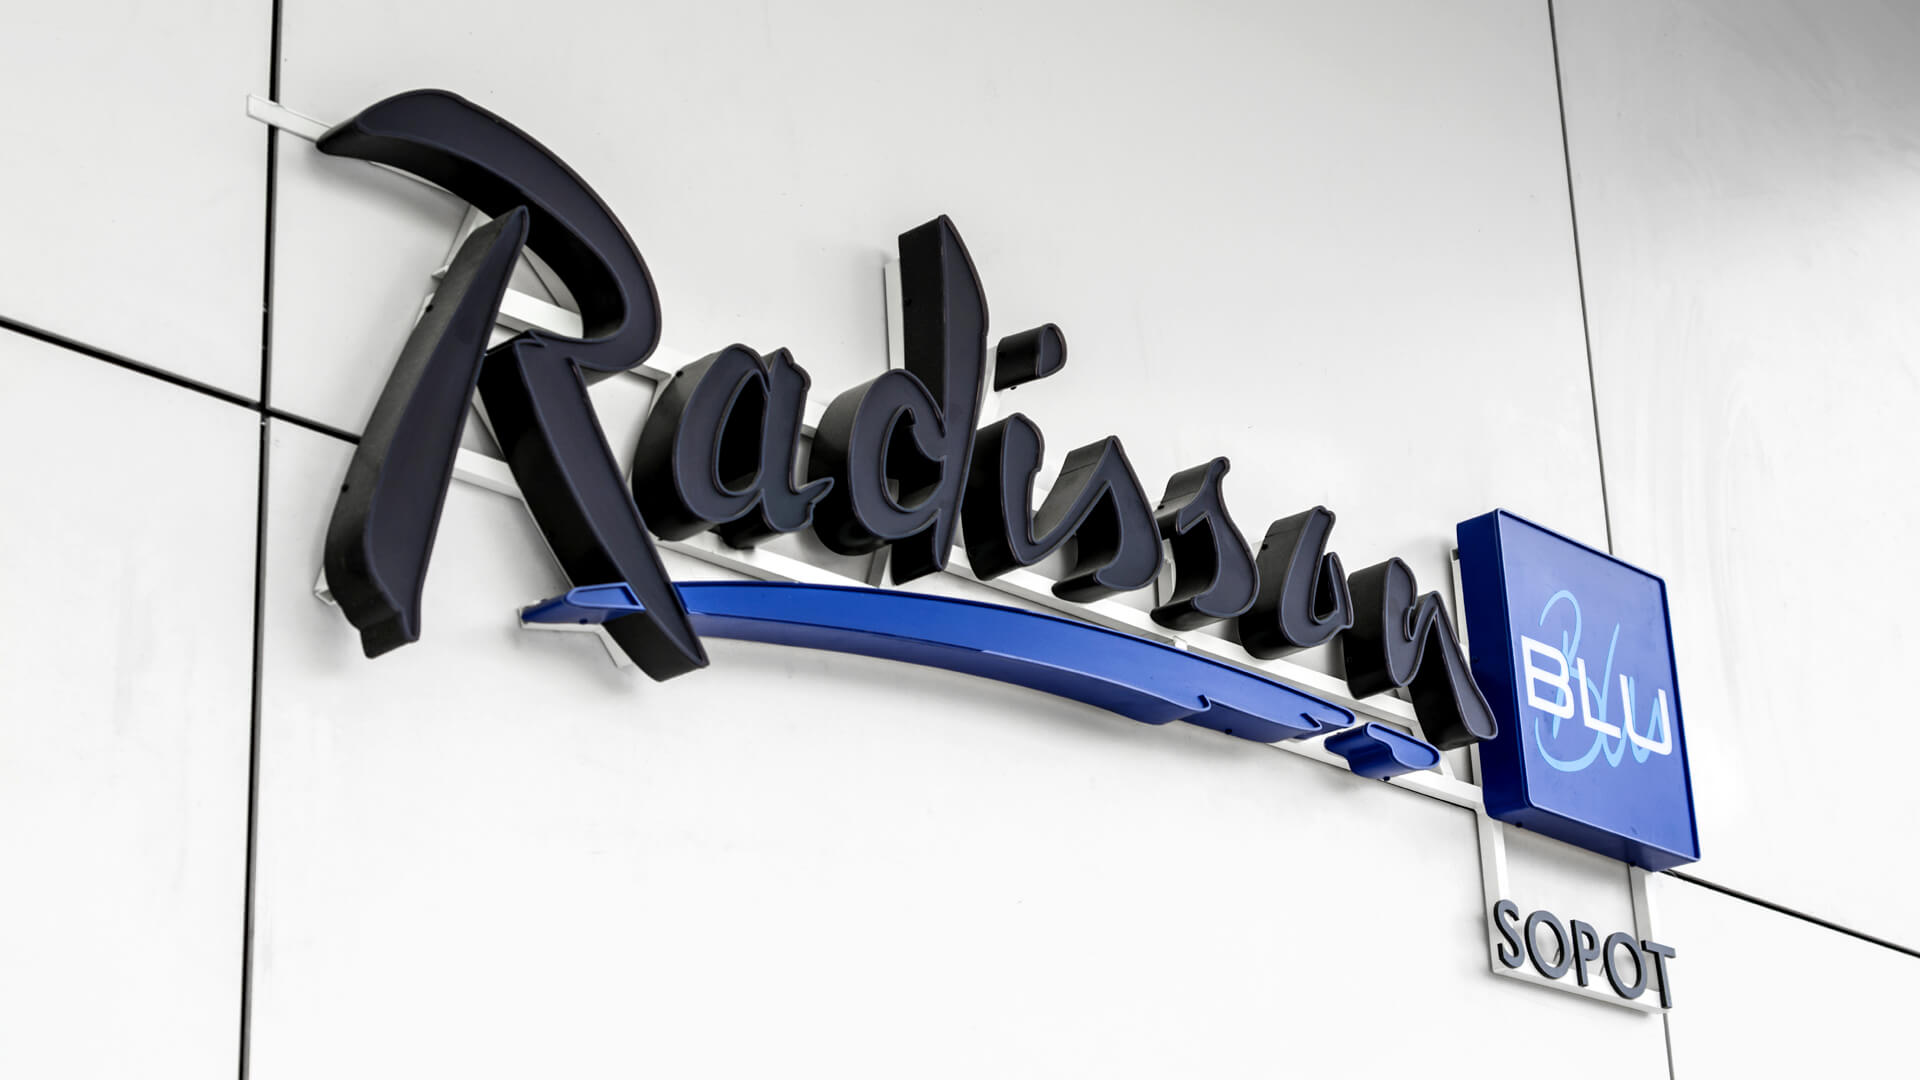 radisson blu - litery-podswietlane-3d-led-black-&-white-radisson-blu